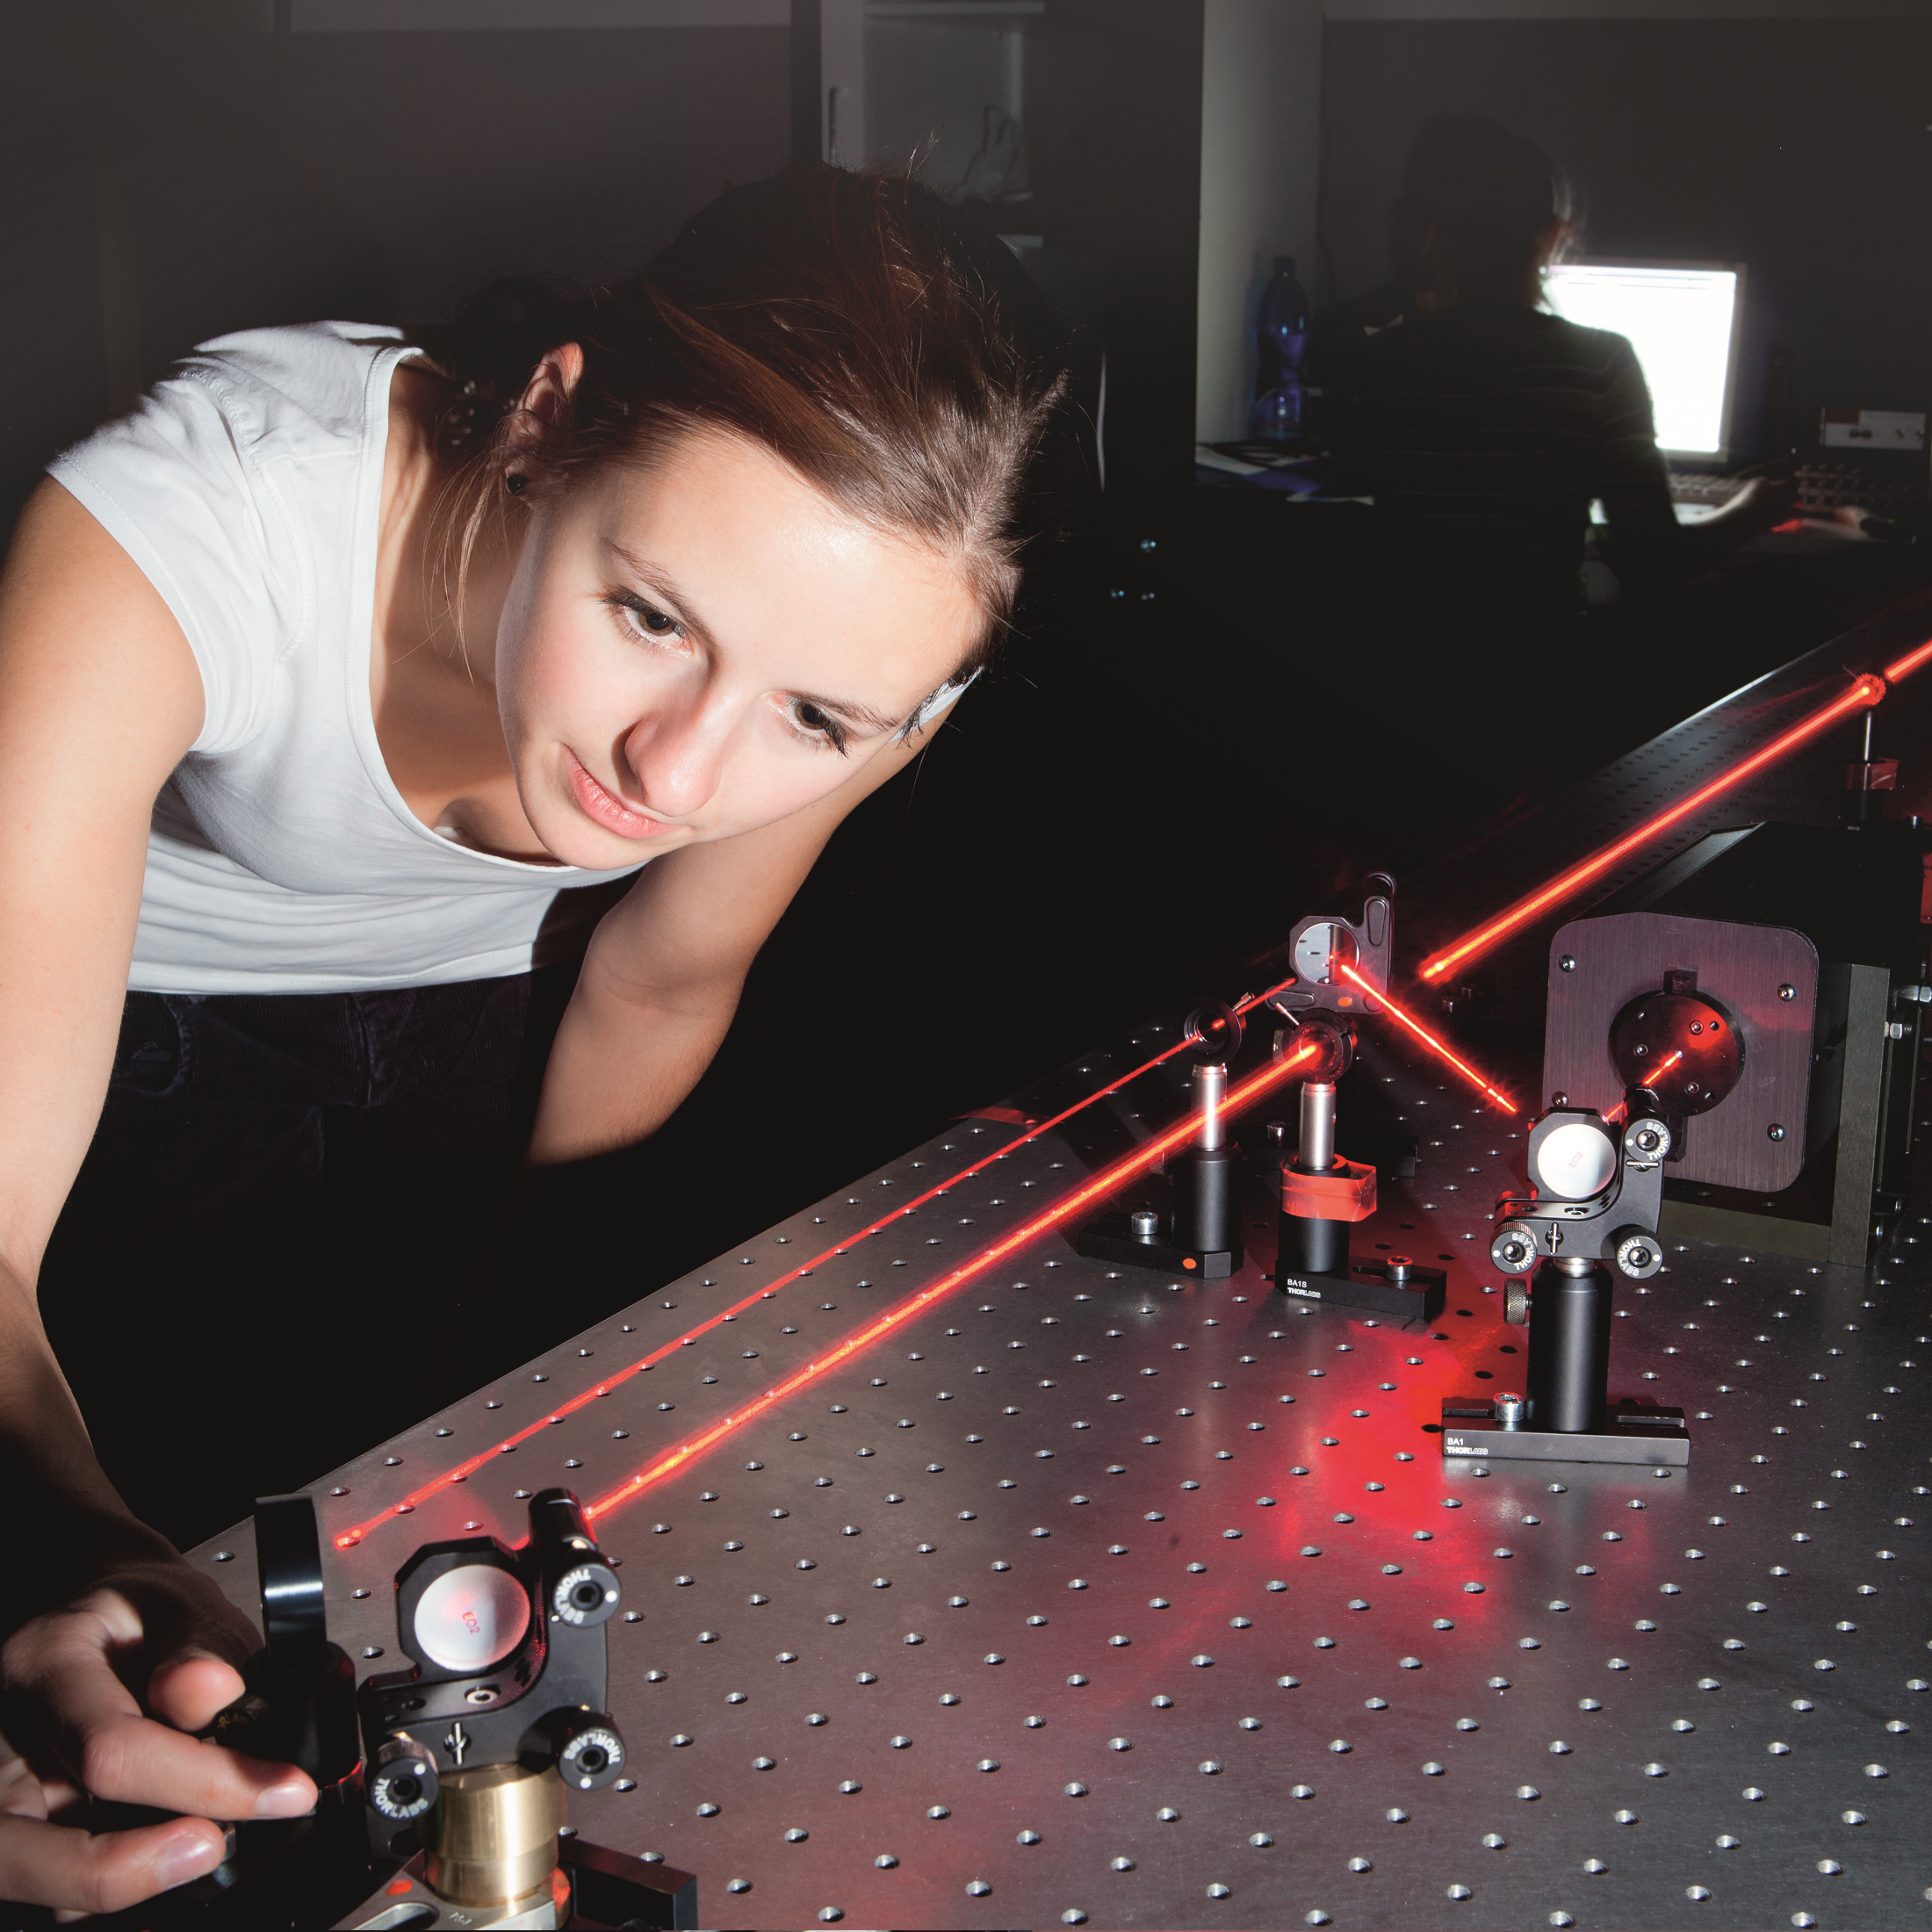 Dot laser, red, 650 nm, 0.4 mW, 3 V DC, Ø8x25 mm, Laser Class 1, Focus adjustable, Cable length 100…